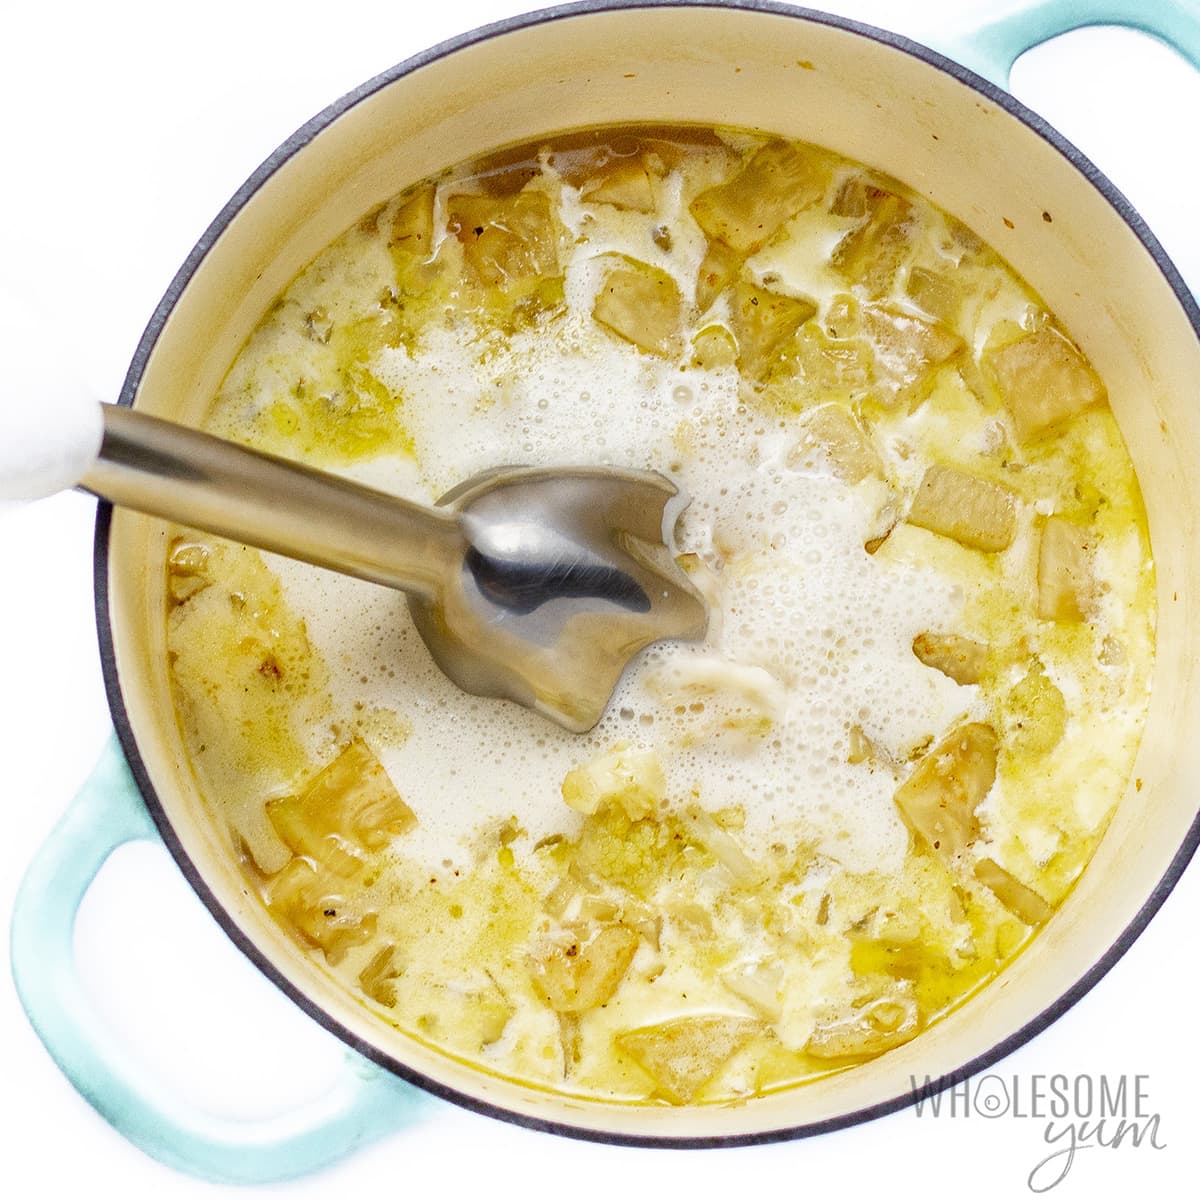 Blending celery root soup with immersion blender.